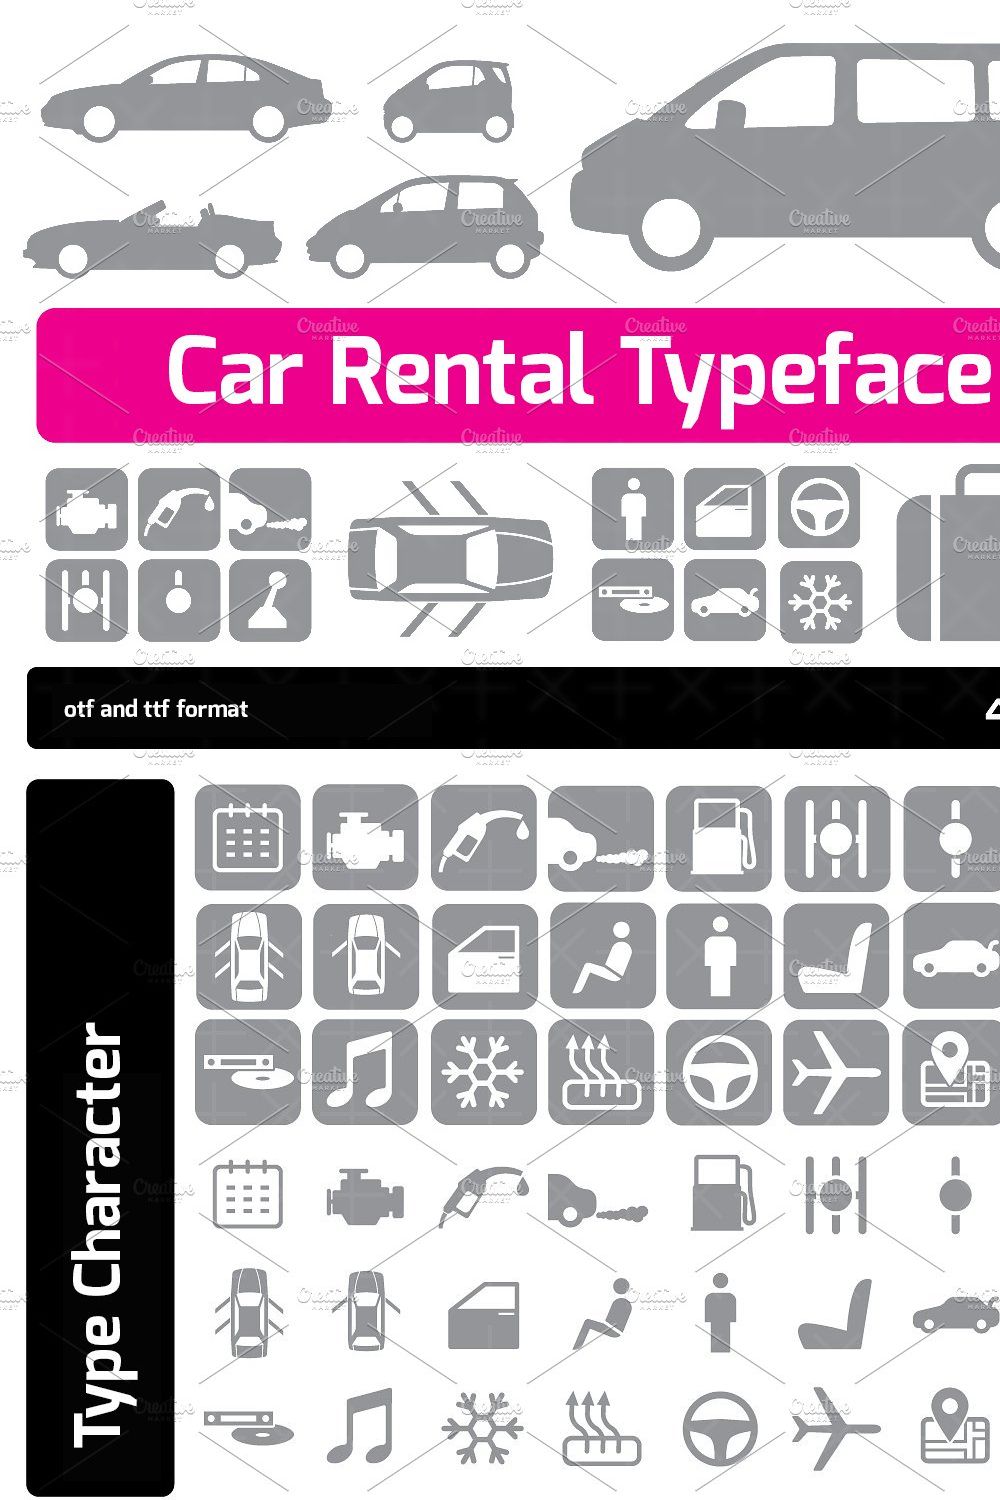 Car Rental Typeface pinterest preview image.